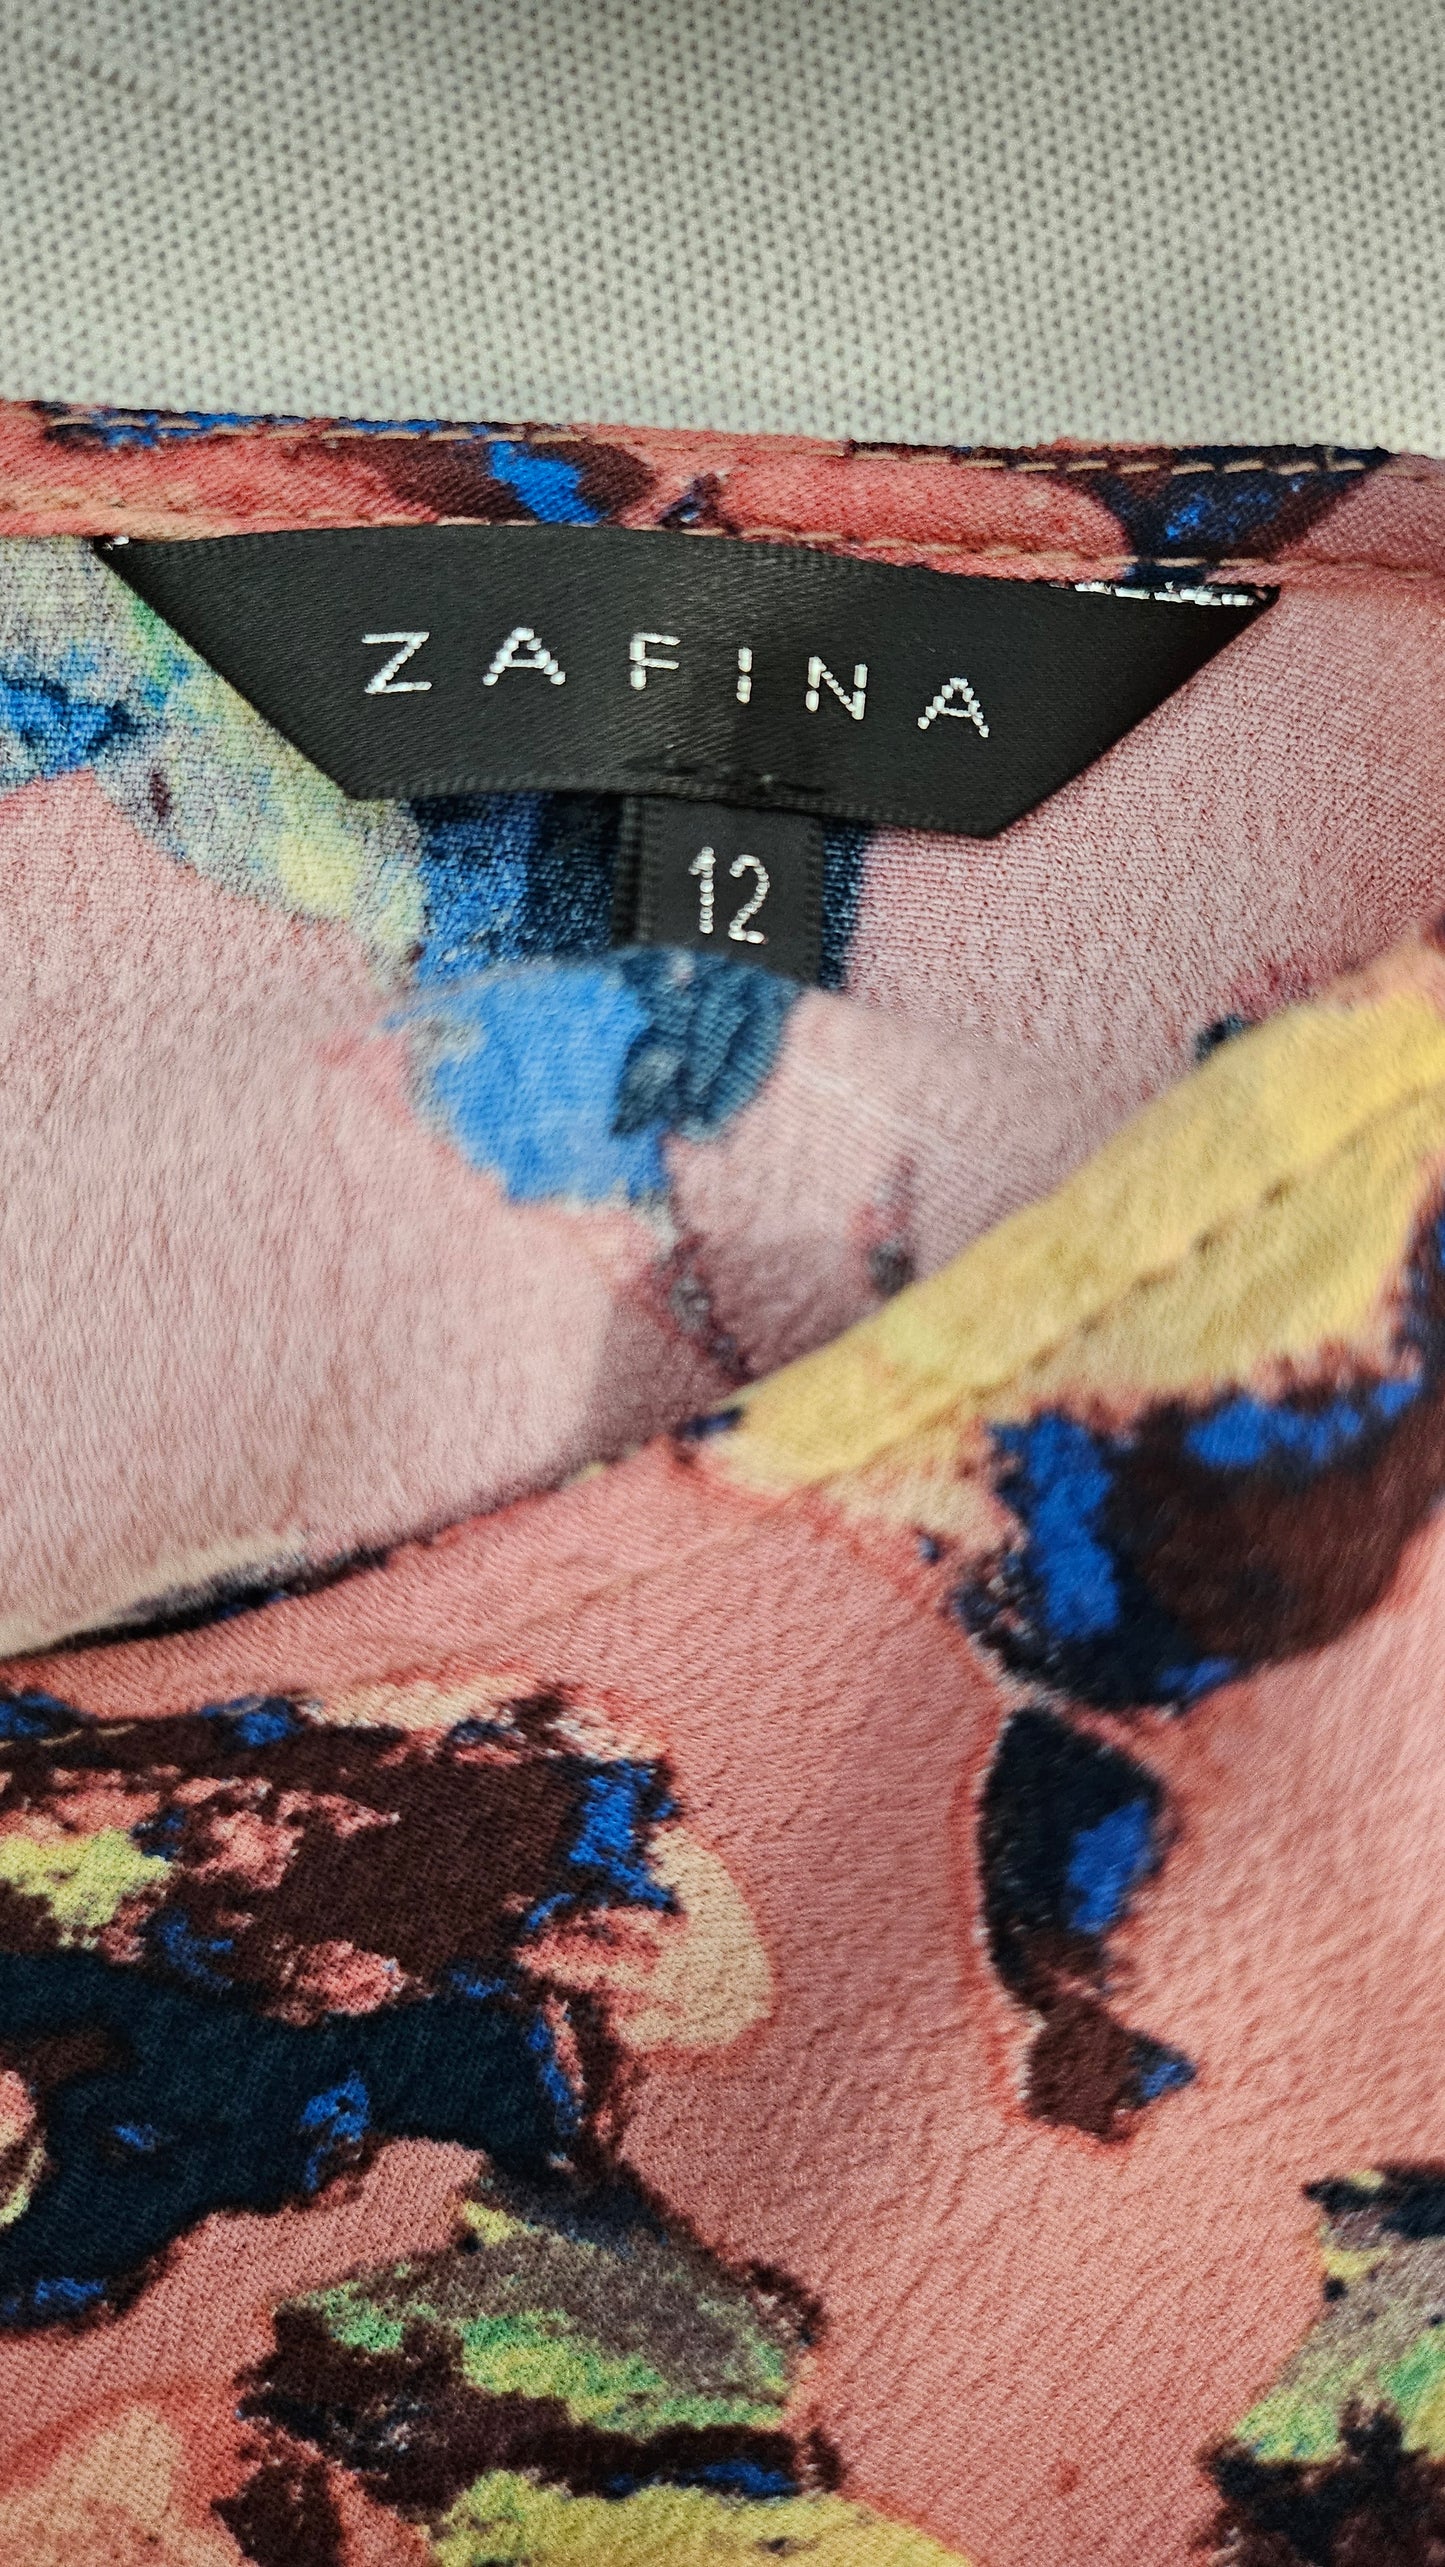 Zafina Multi Frilled Hem Top (12)